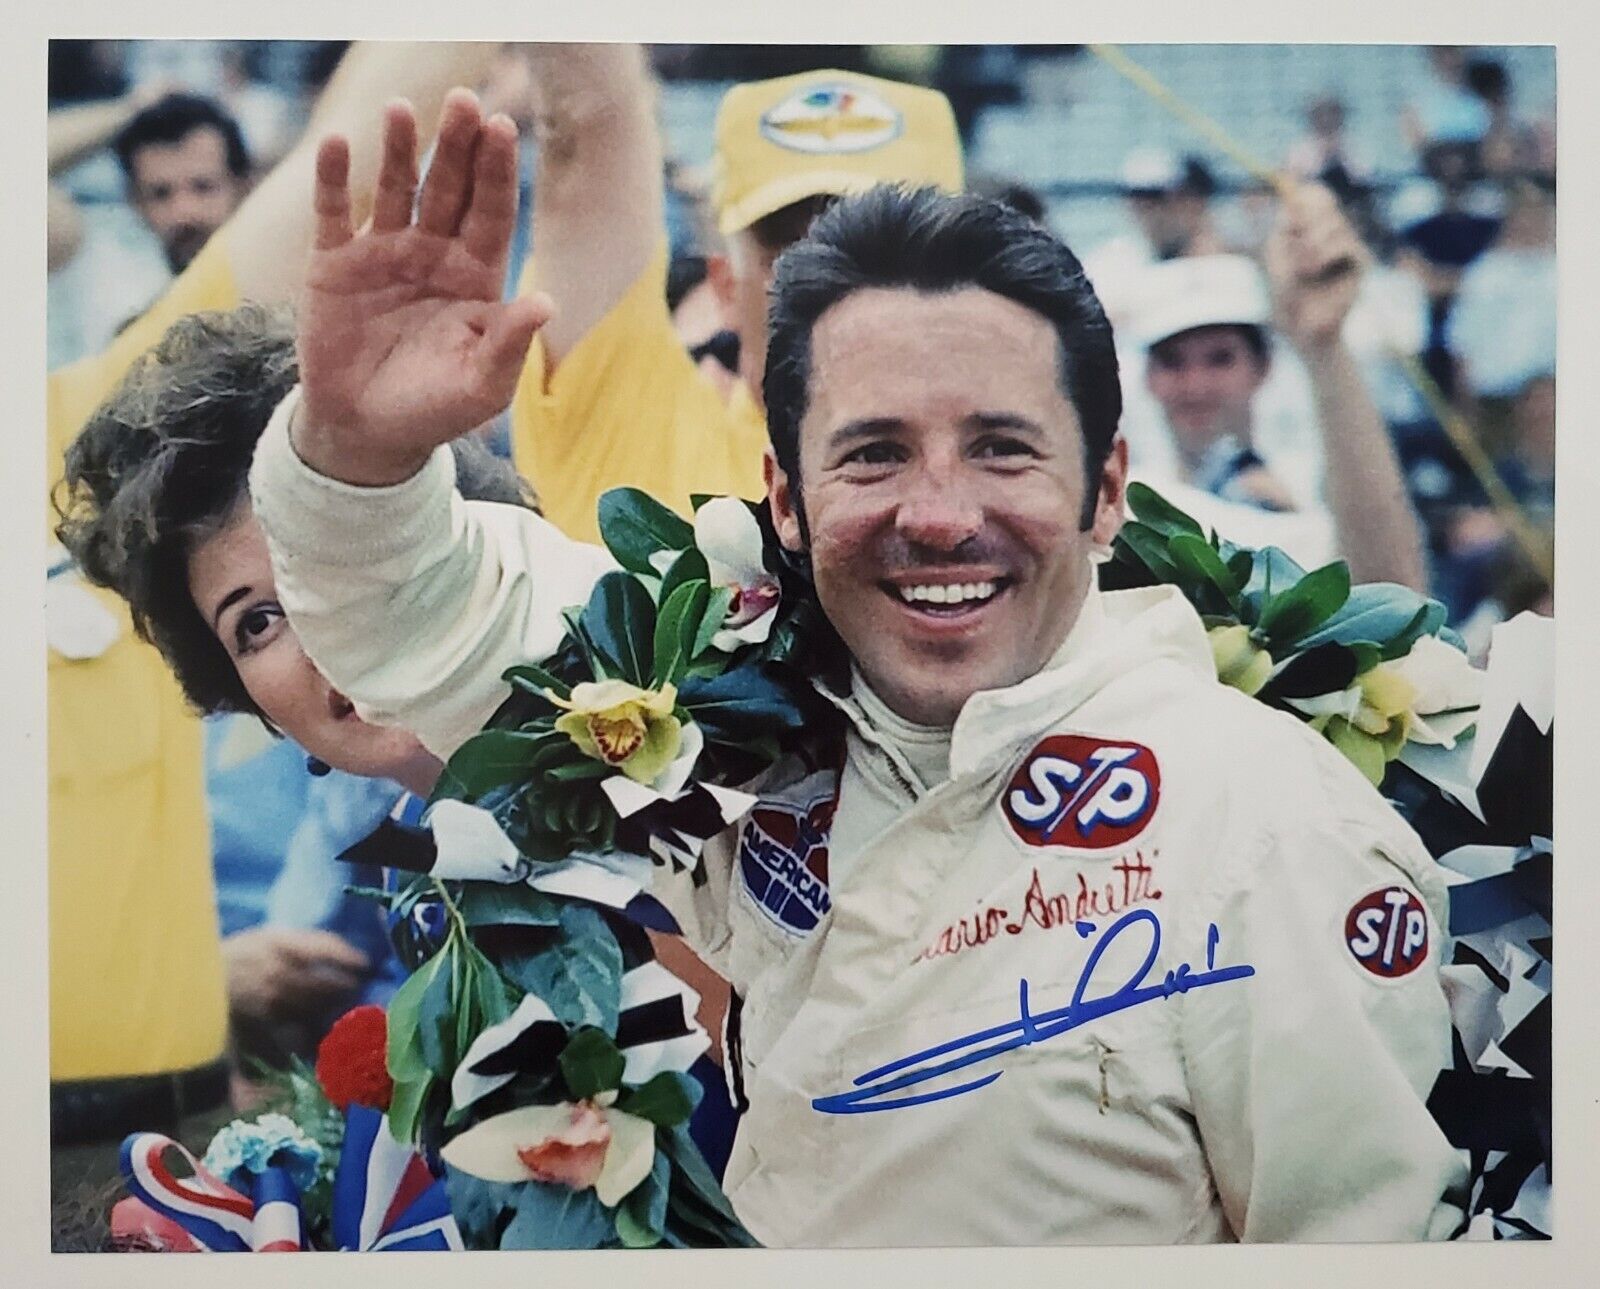 Mario Andretti Signed 8x10 Photo Poster painting Daytona 500 Indy Car Racing Nascar LEGEND RAD